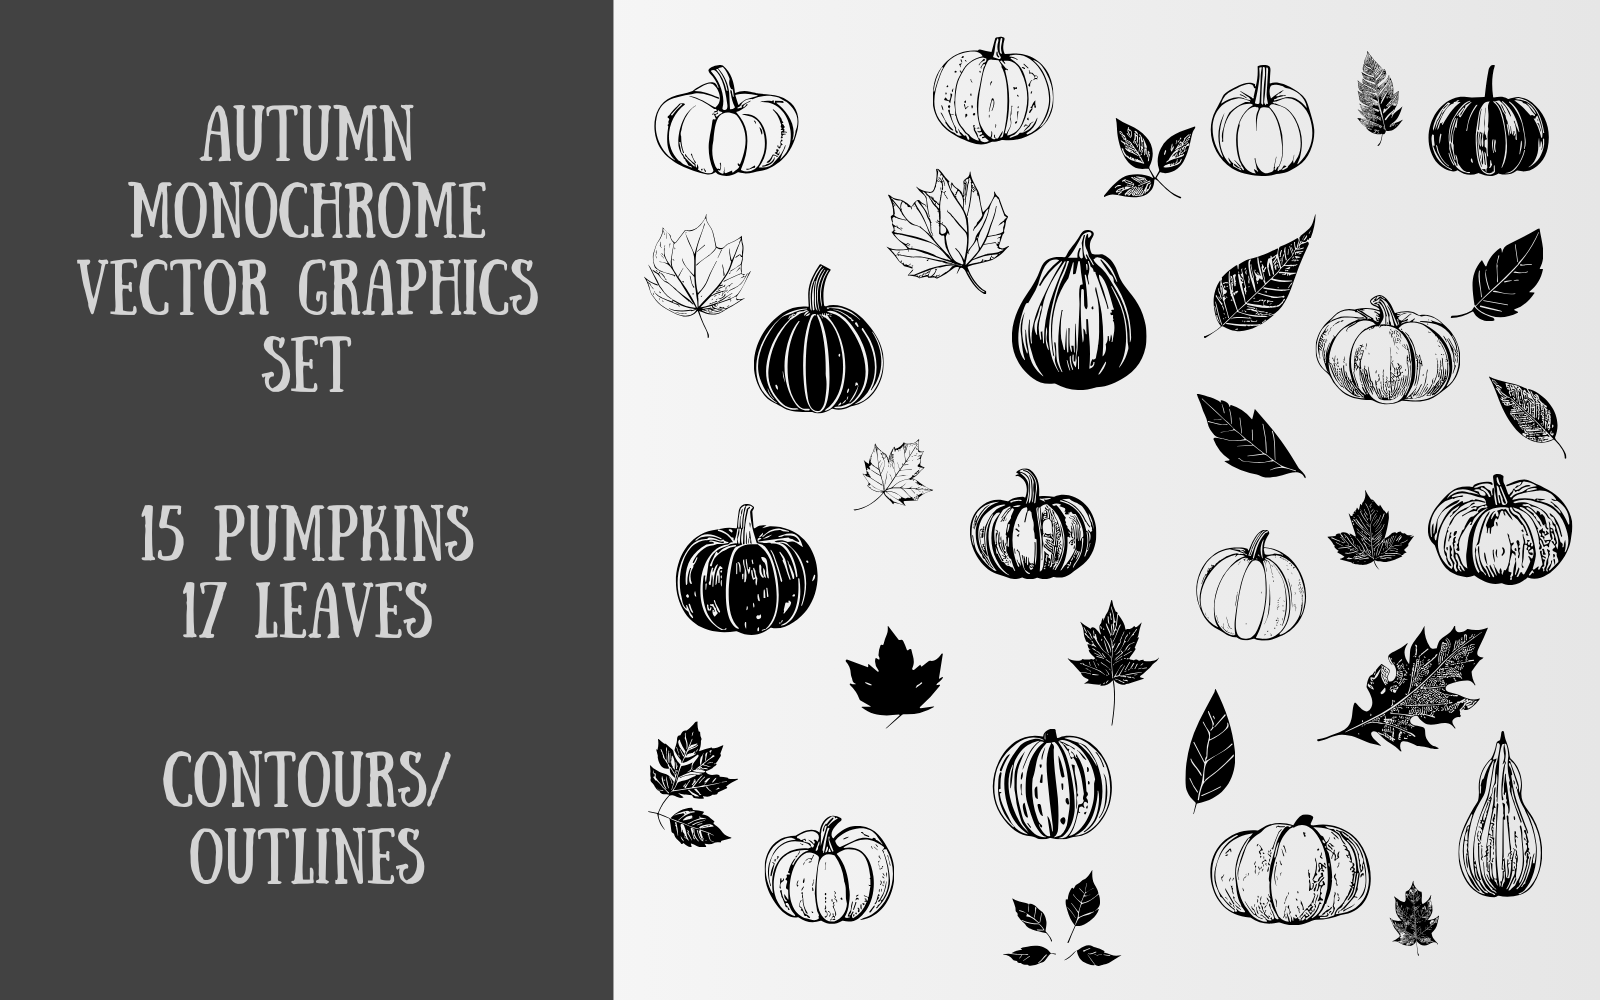 Autumn Monochrome Vector Graphics Set